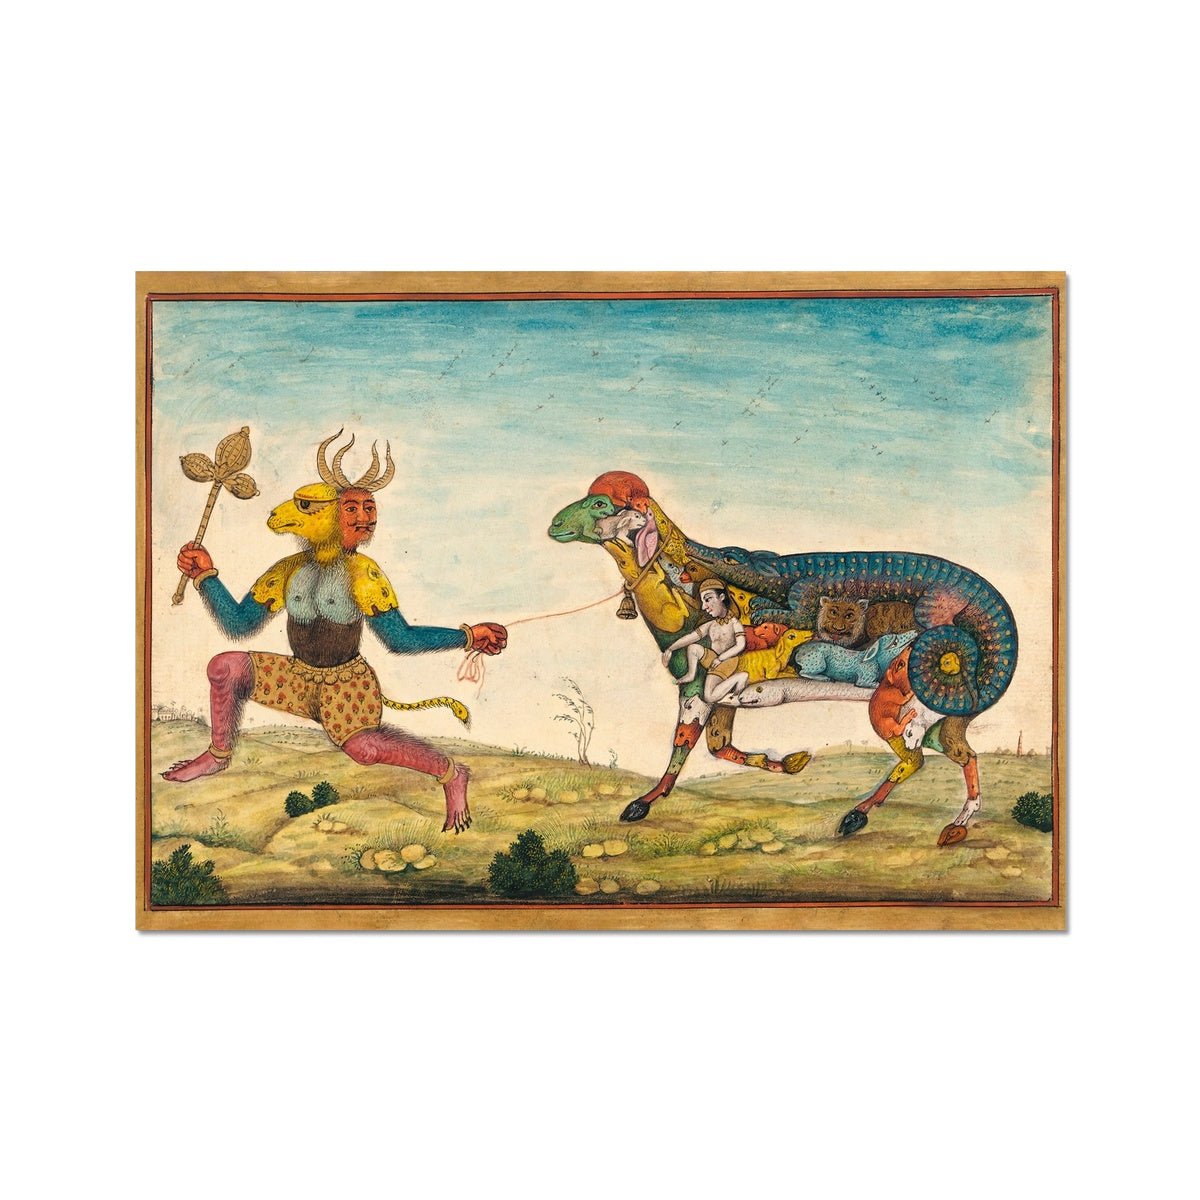 Fine art A5 Landscape Indian Demon Leading a Surreal Composite Sheep | Persian Folklore Mythology | Mughal-Period Islamic Fine Art Print